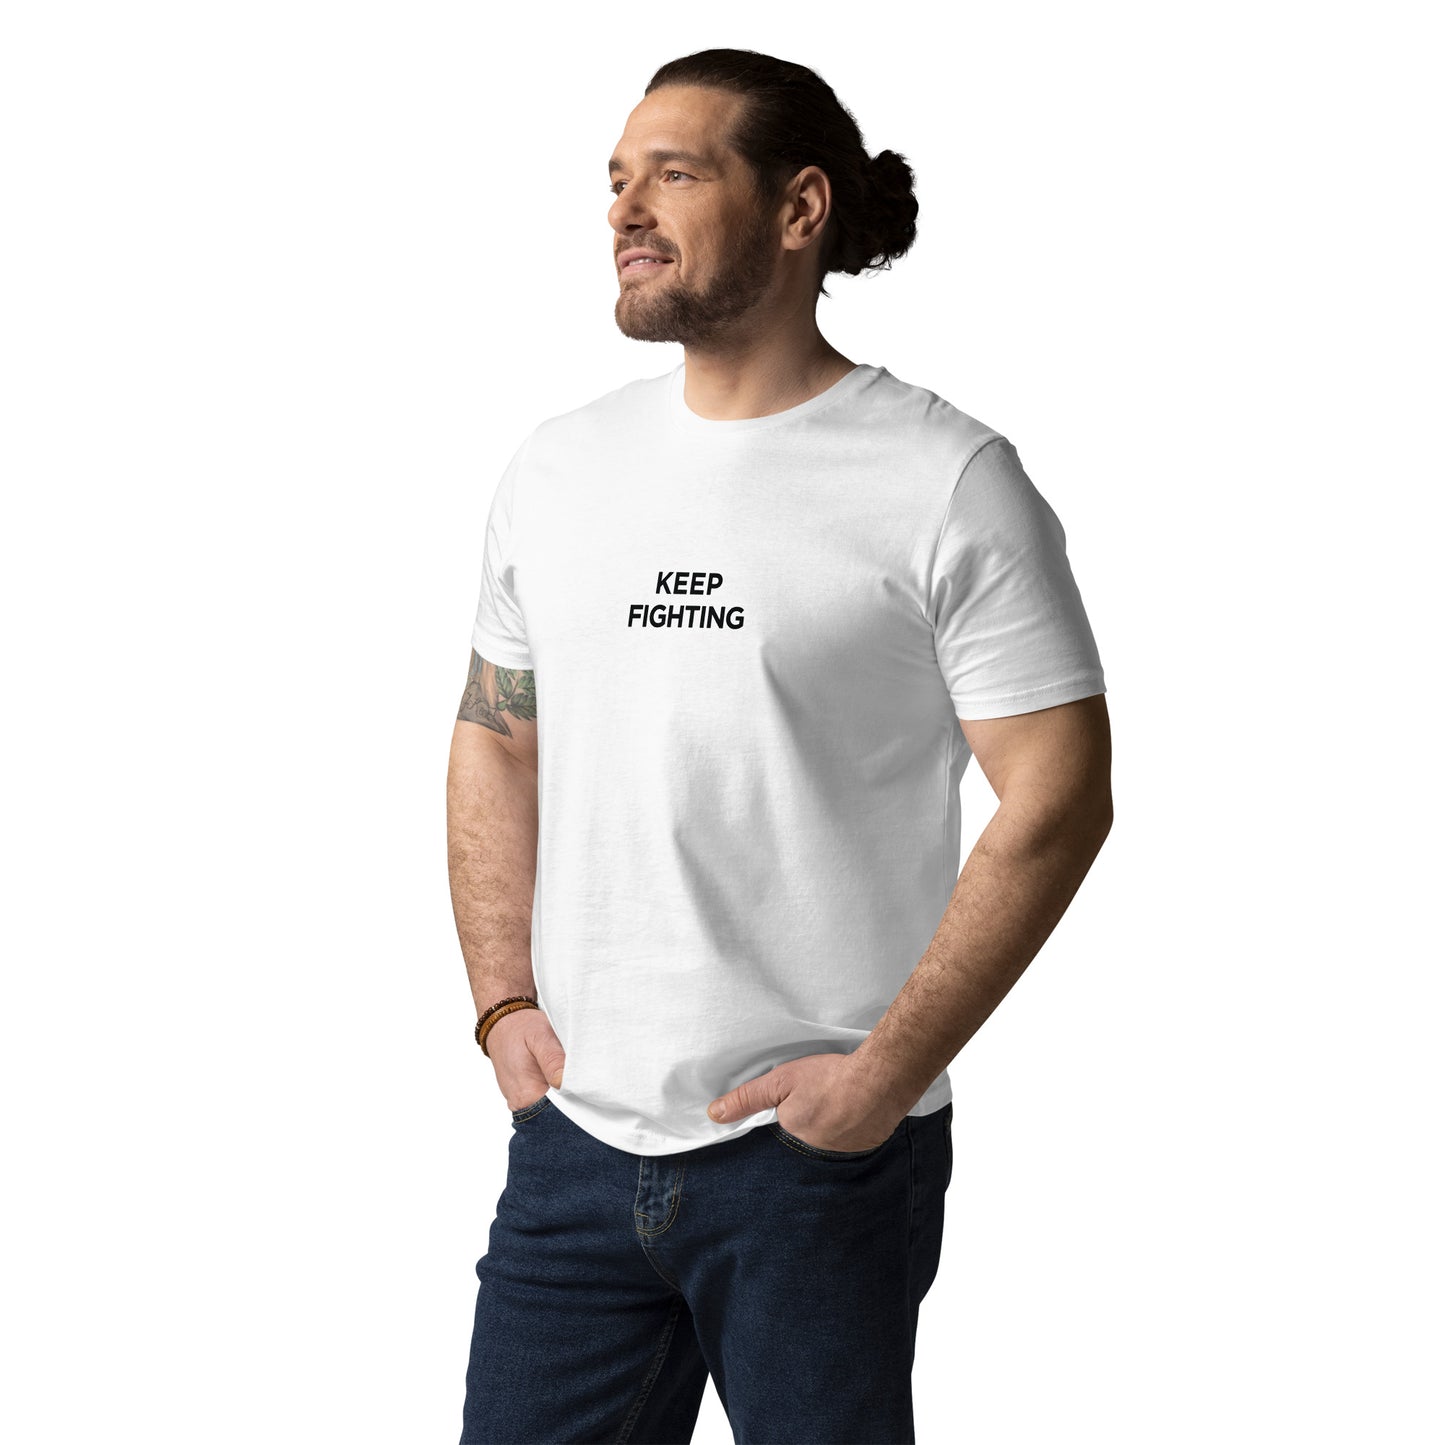 Keep Fighting Men's 100% Organic Cotton T-Shirt